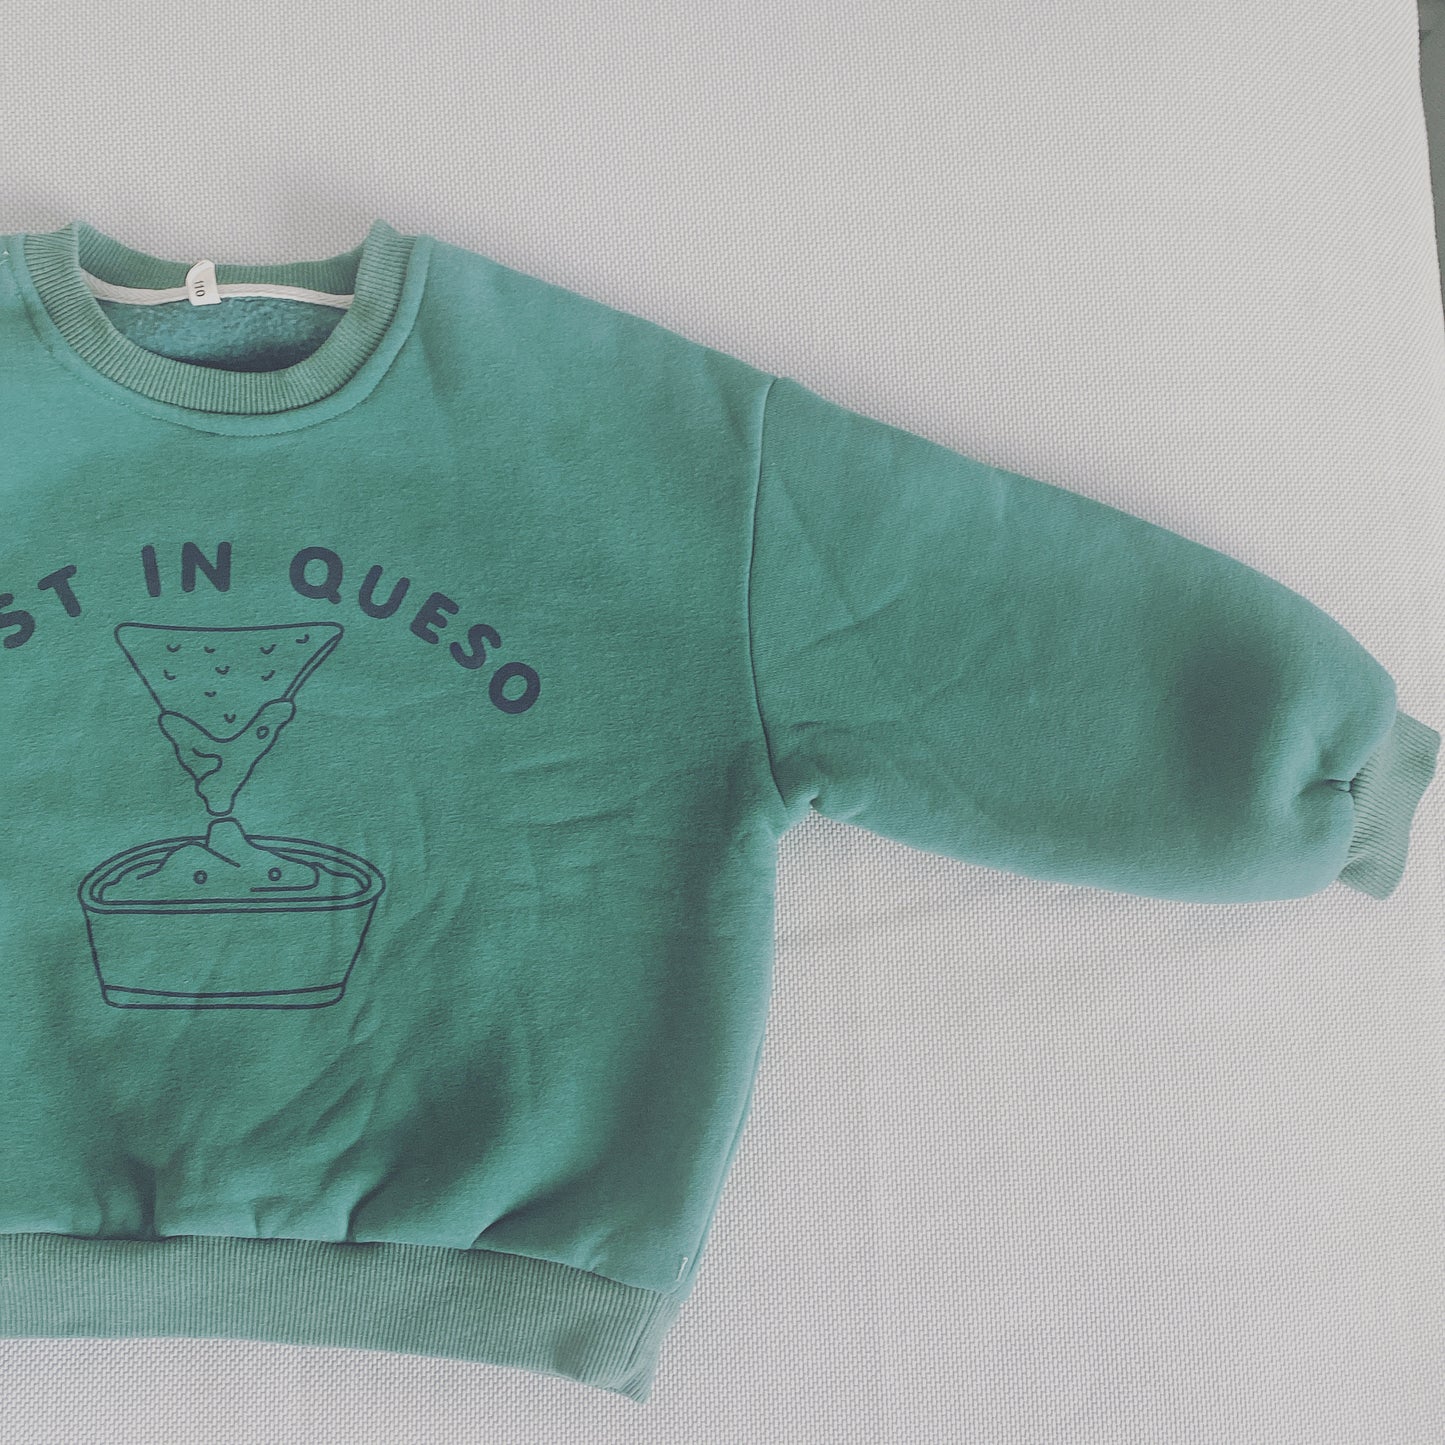 queso pullover / green